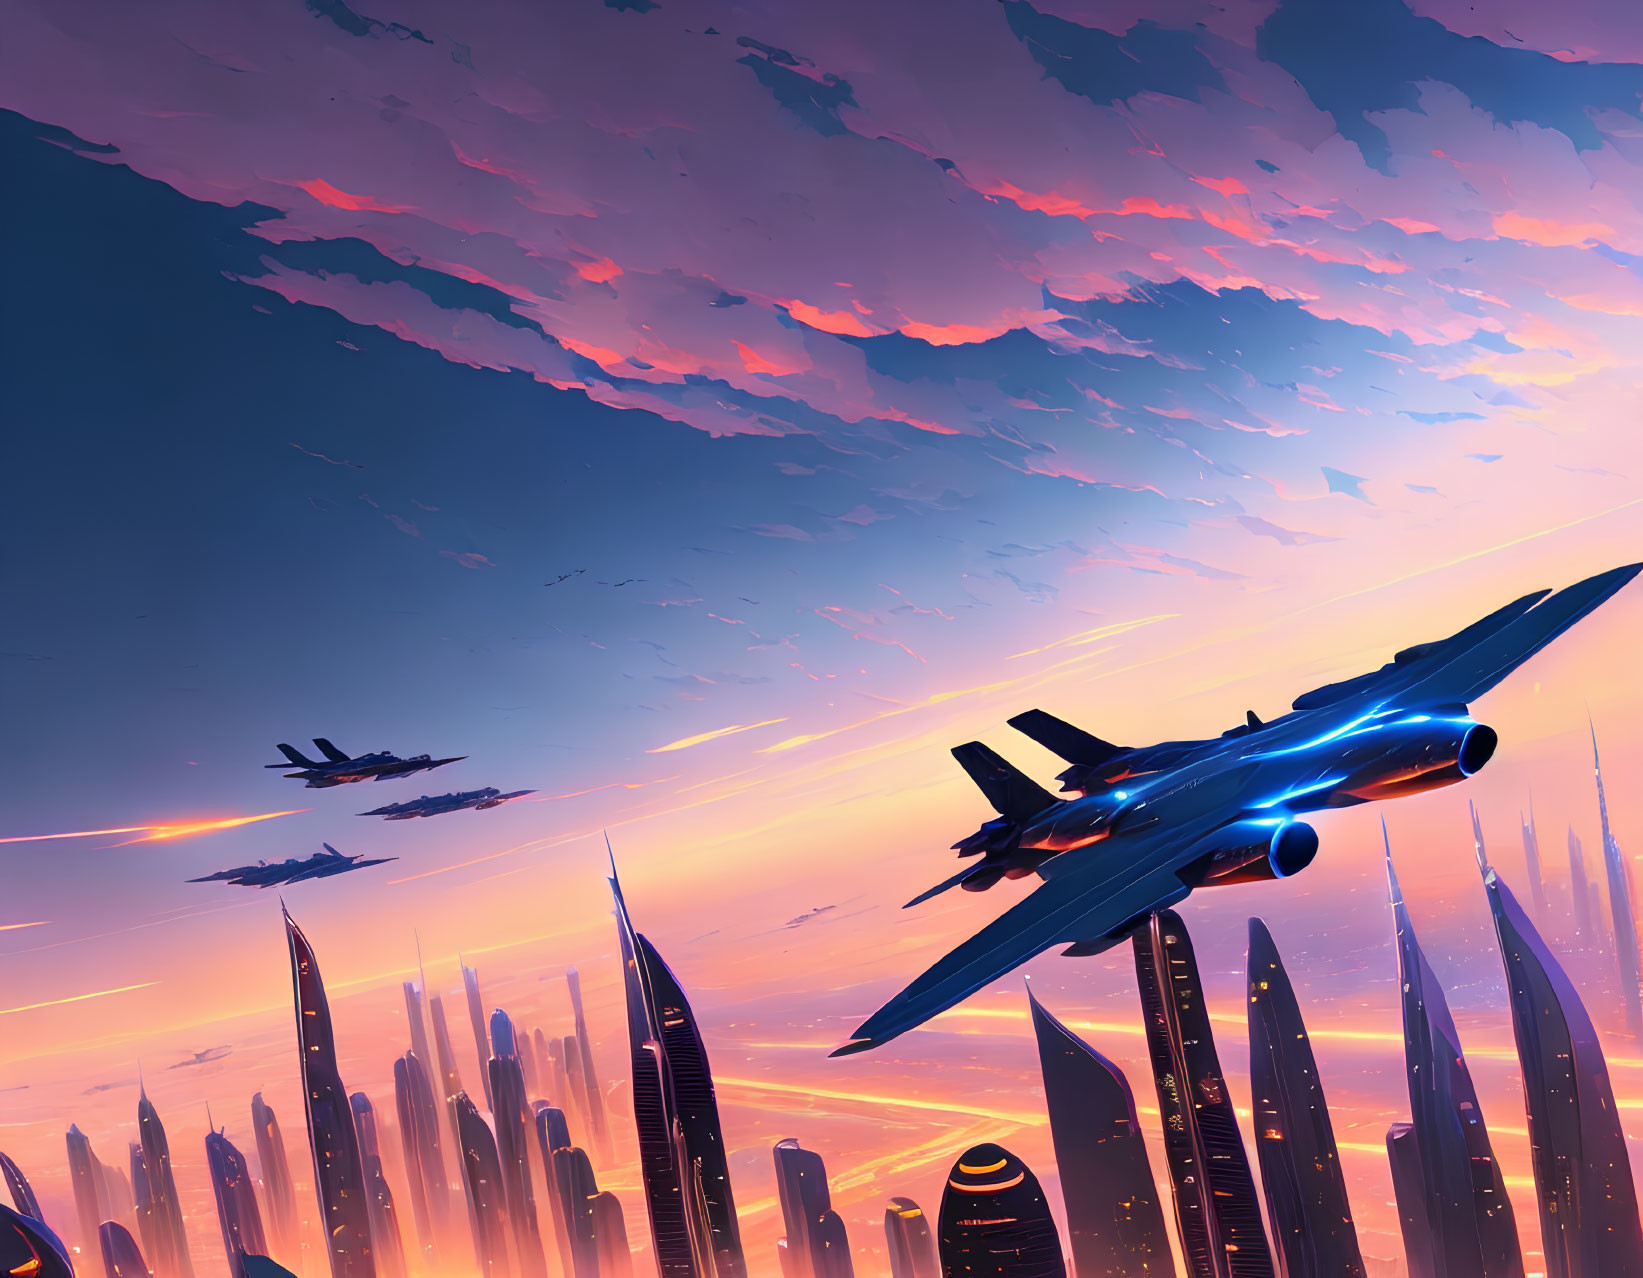 Futuristic fighter jets over vibrant cityscape at dusk